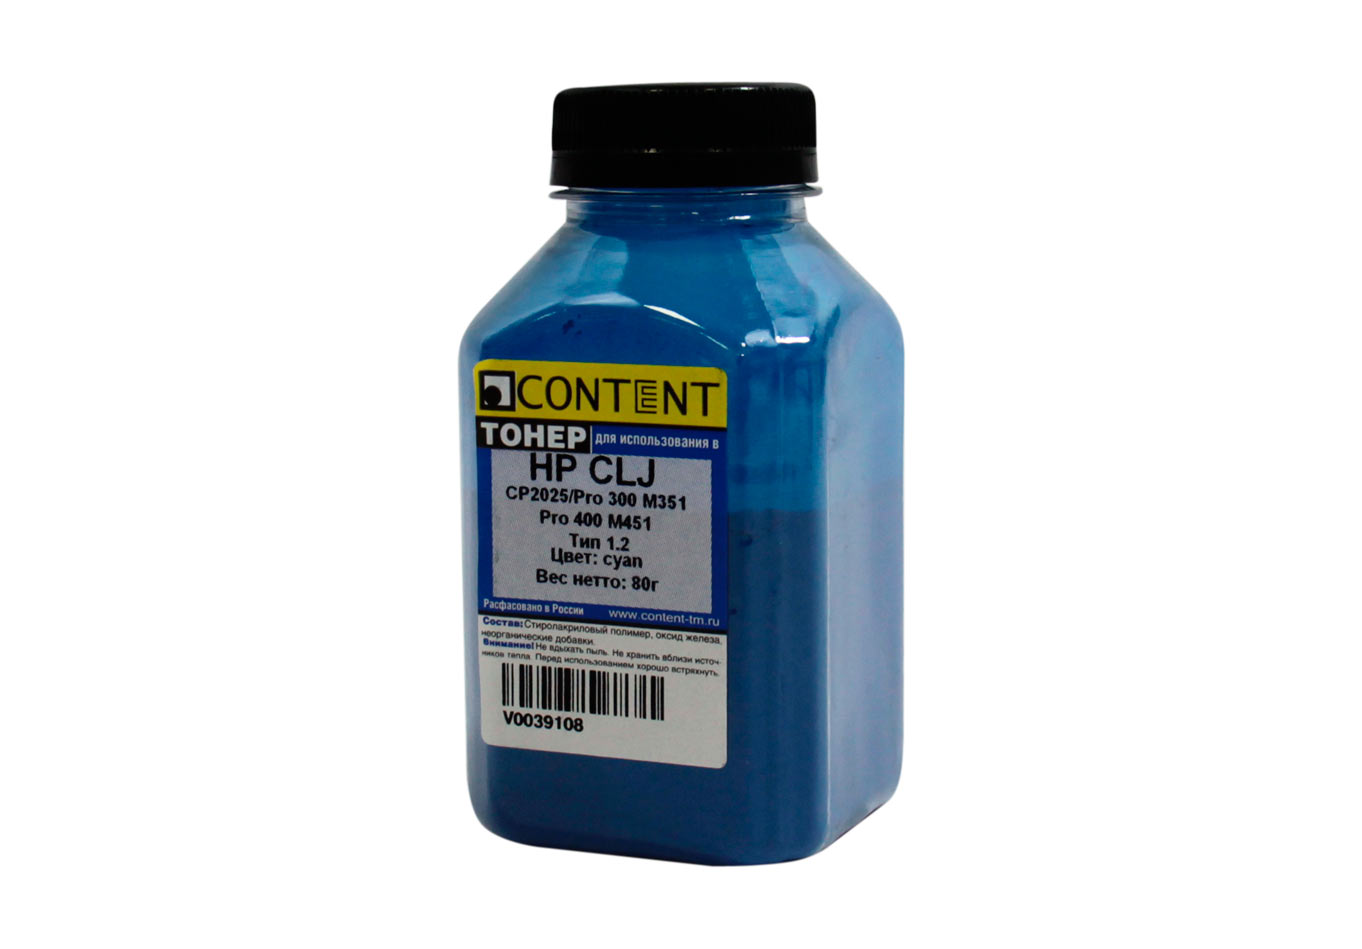 Тонер Content Тип 1.2, бутыль 80 г, голубой, совместимый для CLJ CP2025, Pro 300 M351, 400 M451 (V0039108)